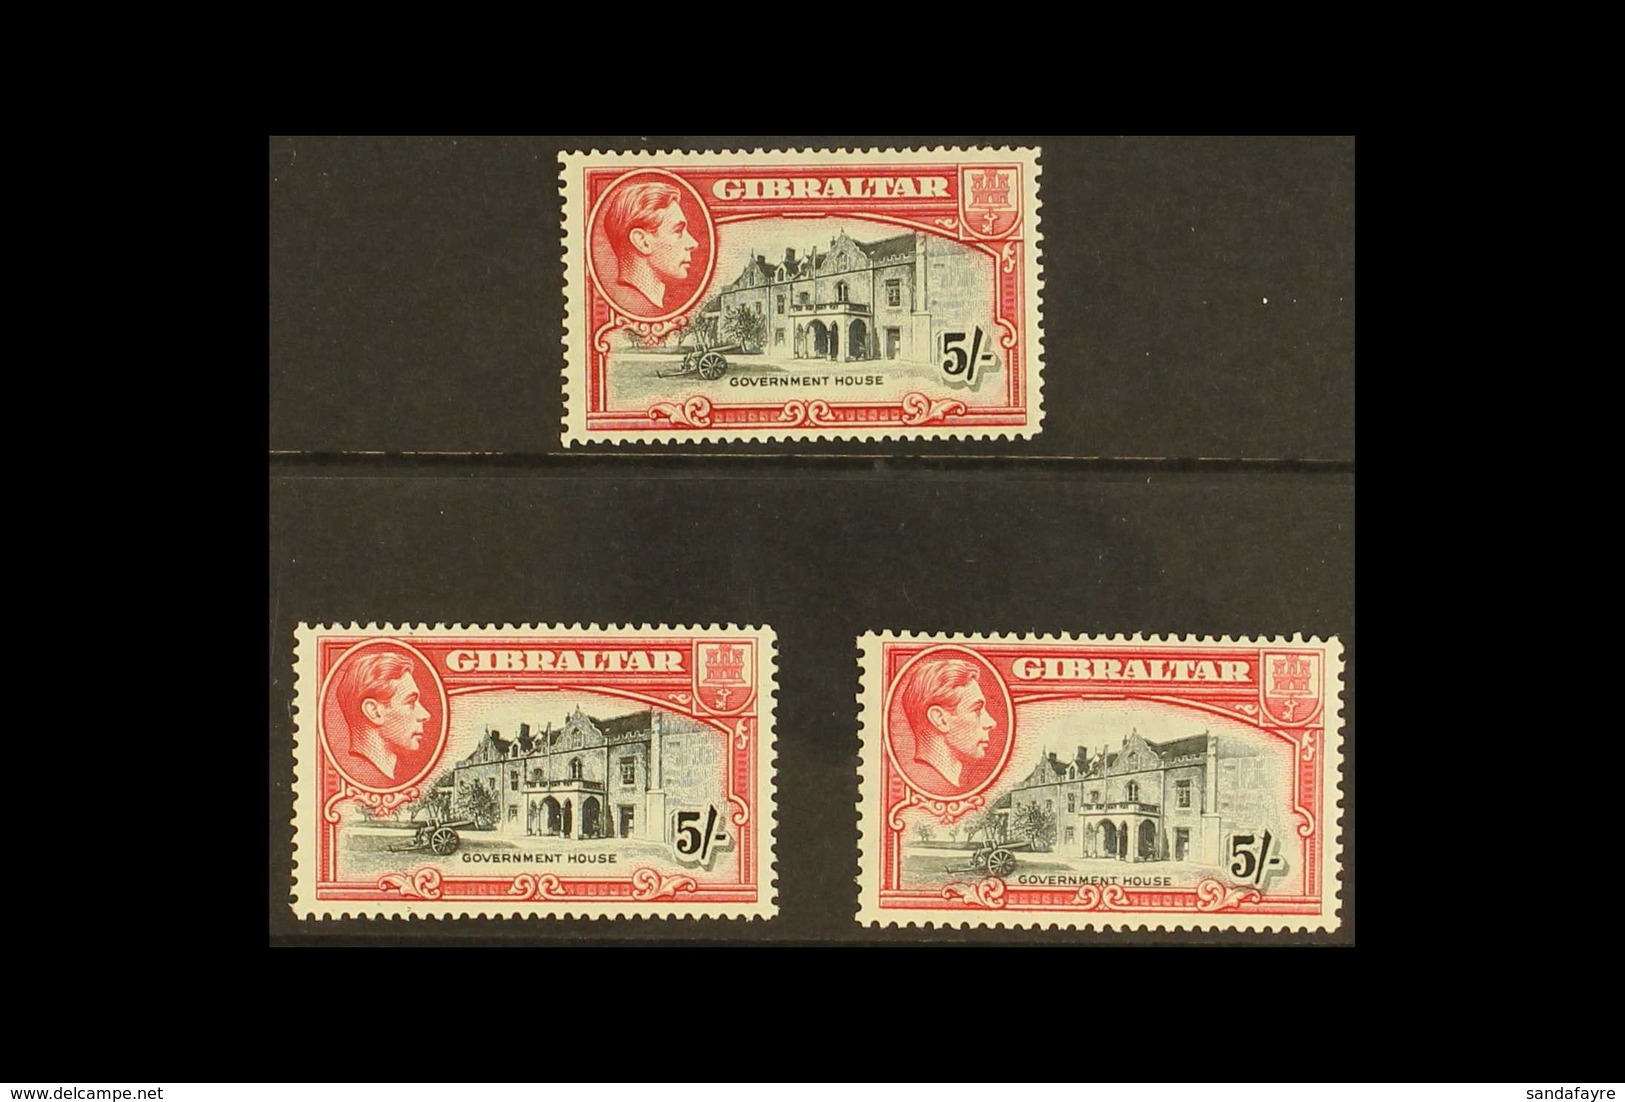 1938-51 5s Black & Carmine Perforation Set, SG 129, 129a & 129b, Very Fine Mint (3 Stamps) For More Images, Please Visit - Gibilterra